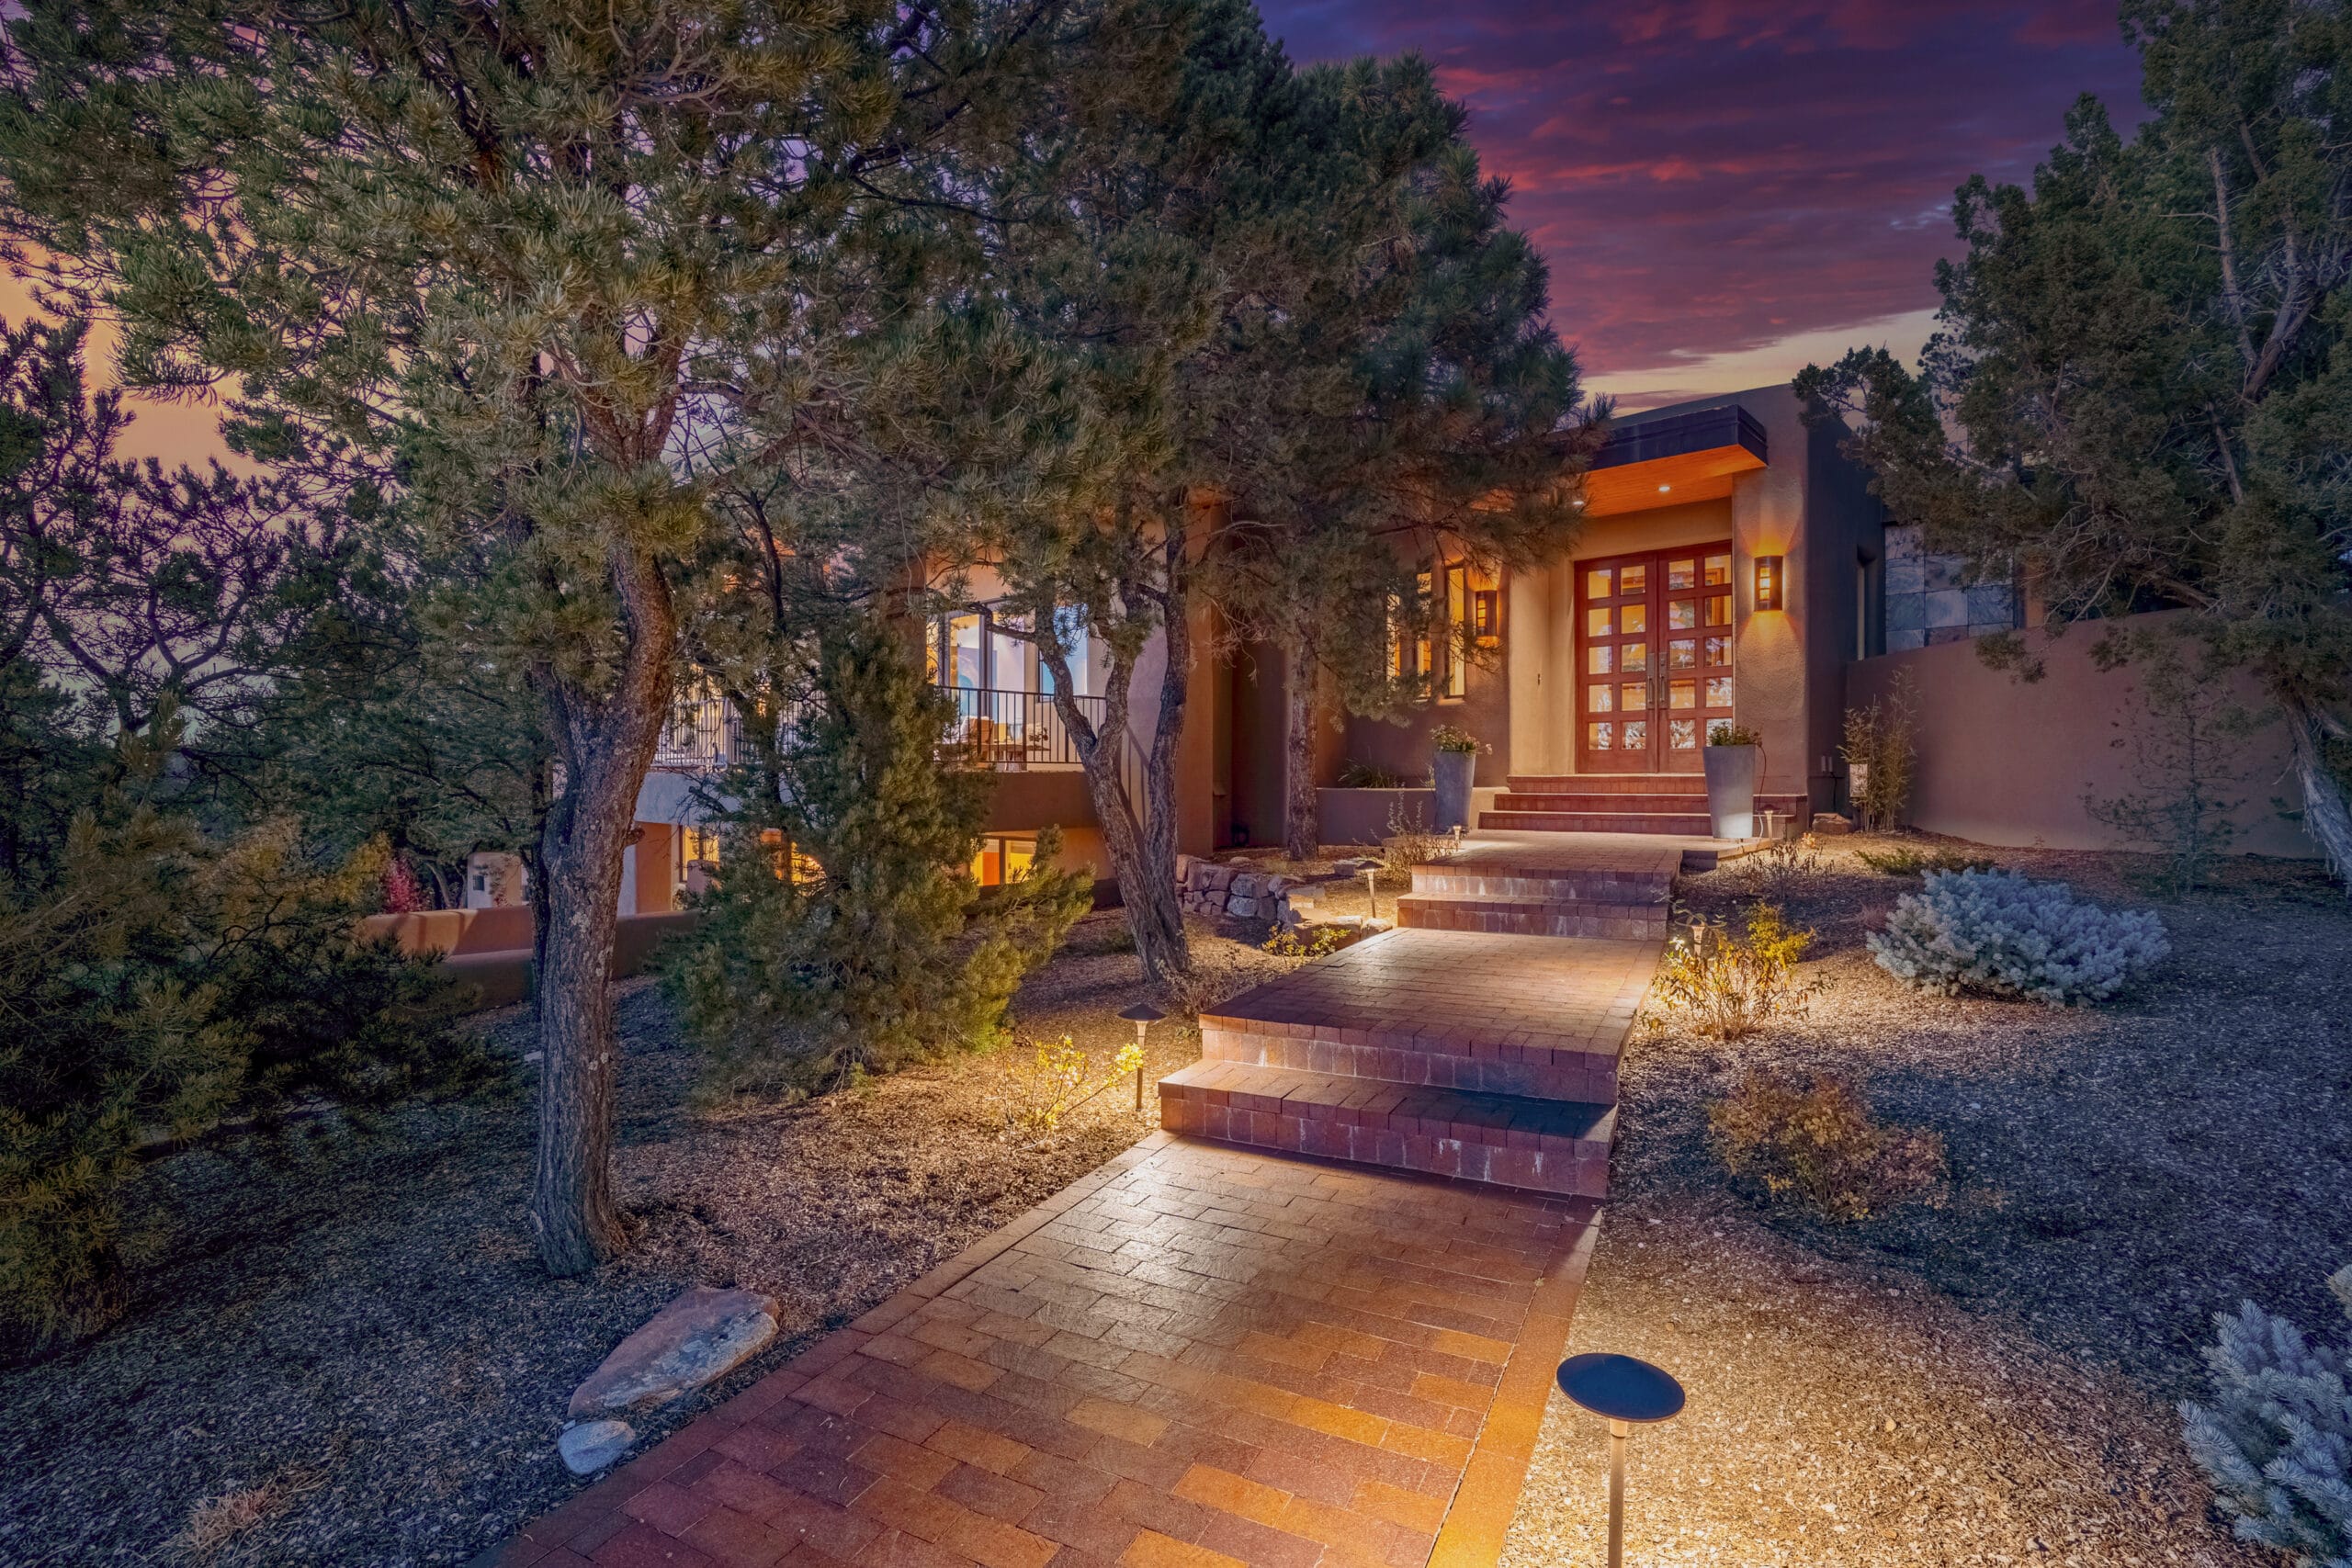 Santa Fe Home Blends Styles For A Certain Southwest Sophistication